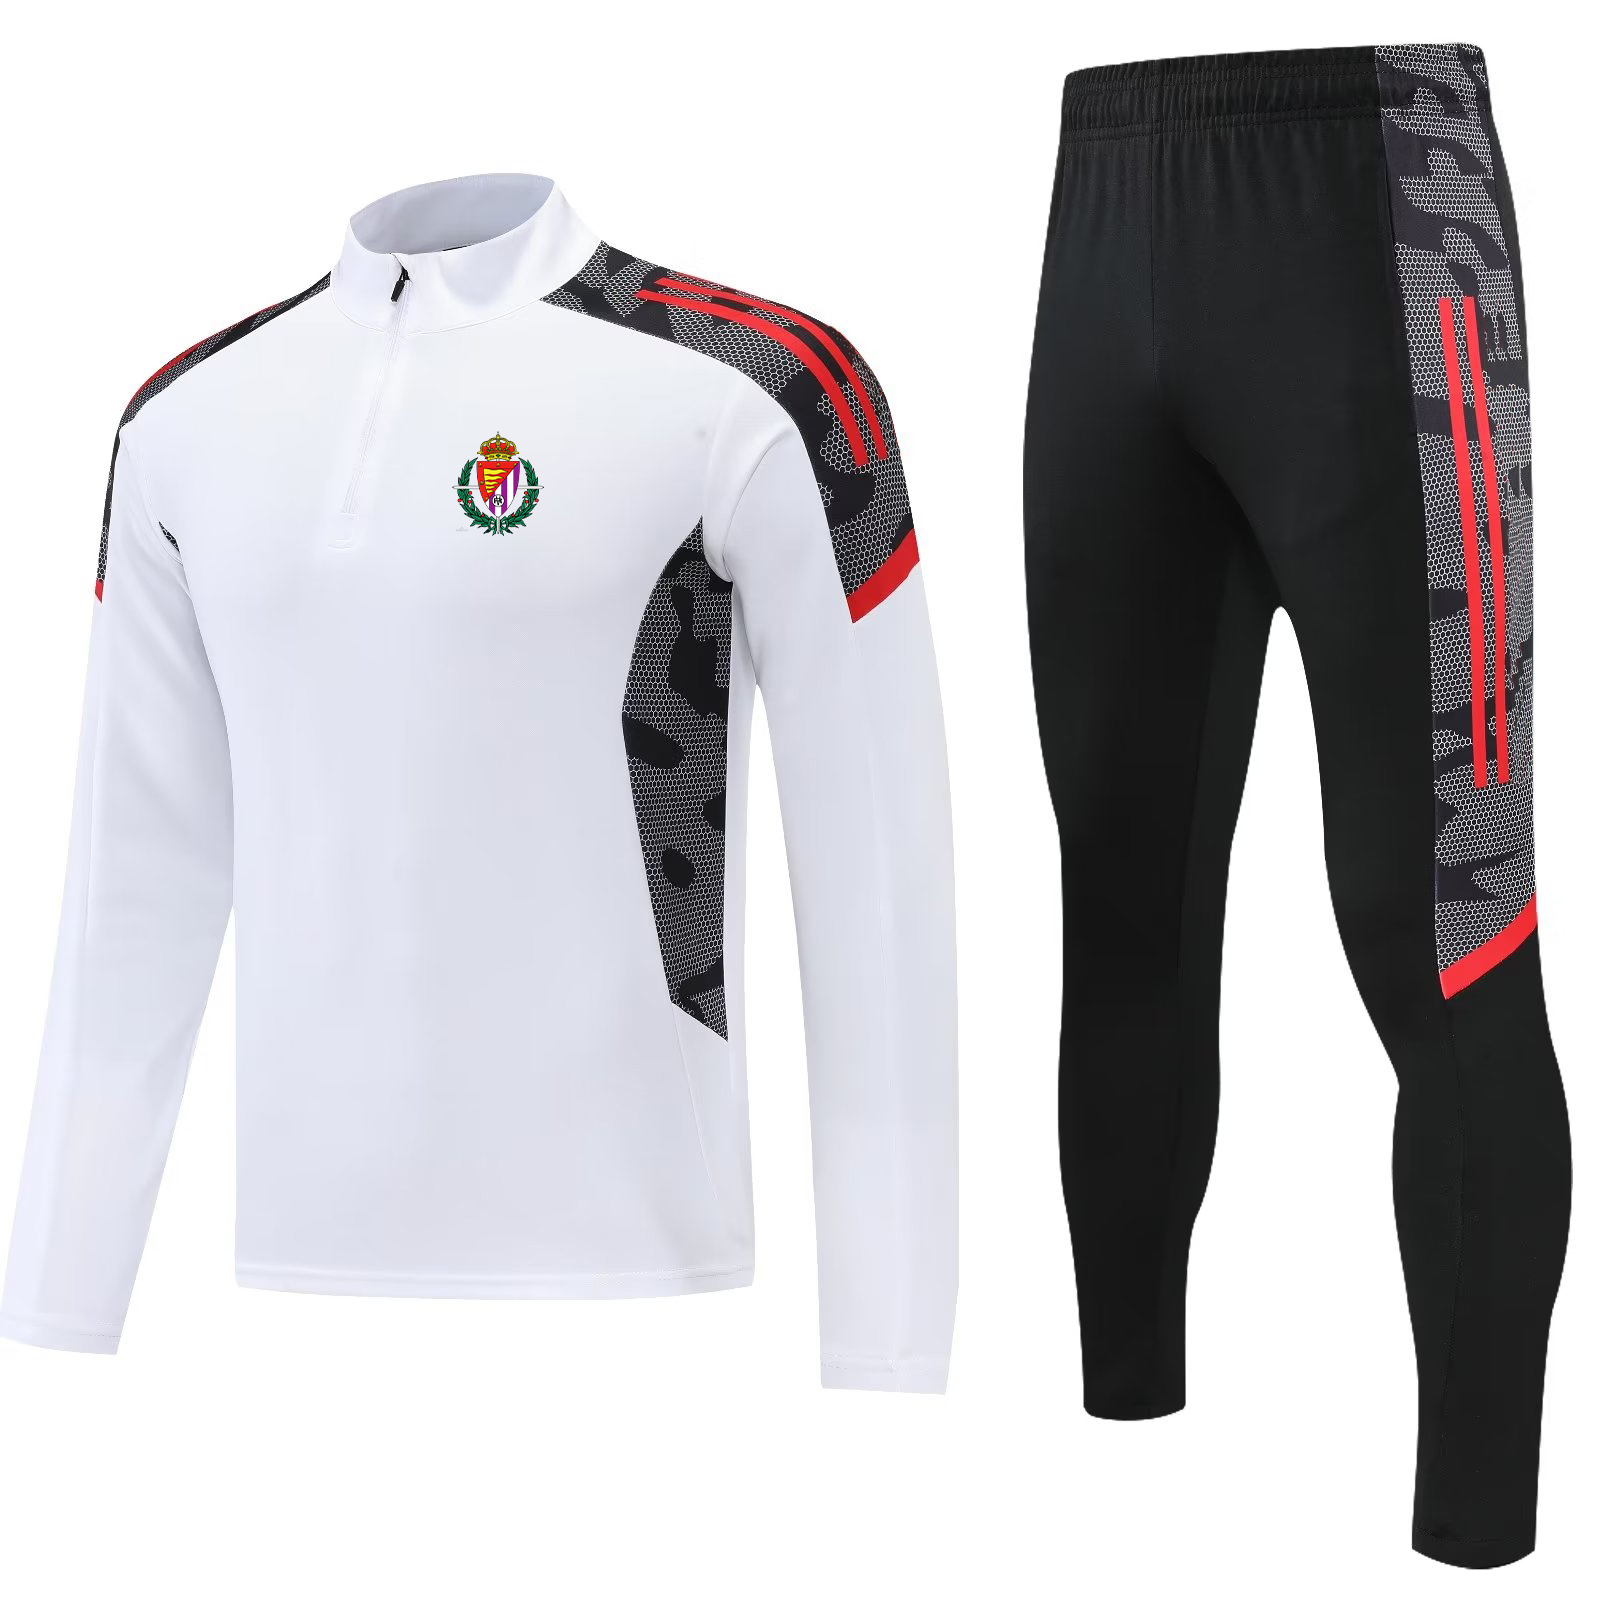 Real valladolid clube de futbol agasalho masculino calças jaqueta ternos de treinamento de futebol roupas esportivas jogging wear adulto tracksuts285d